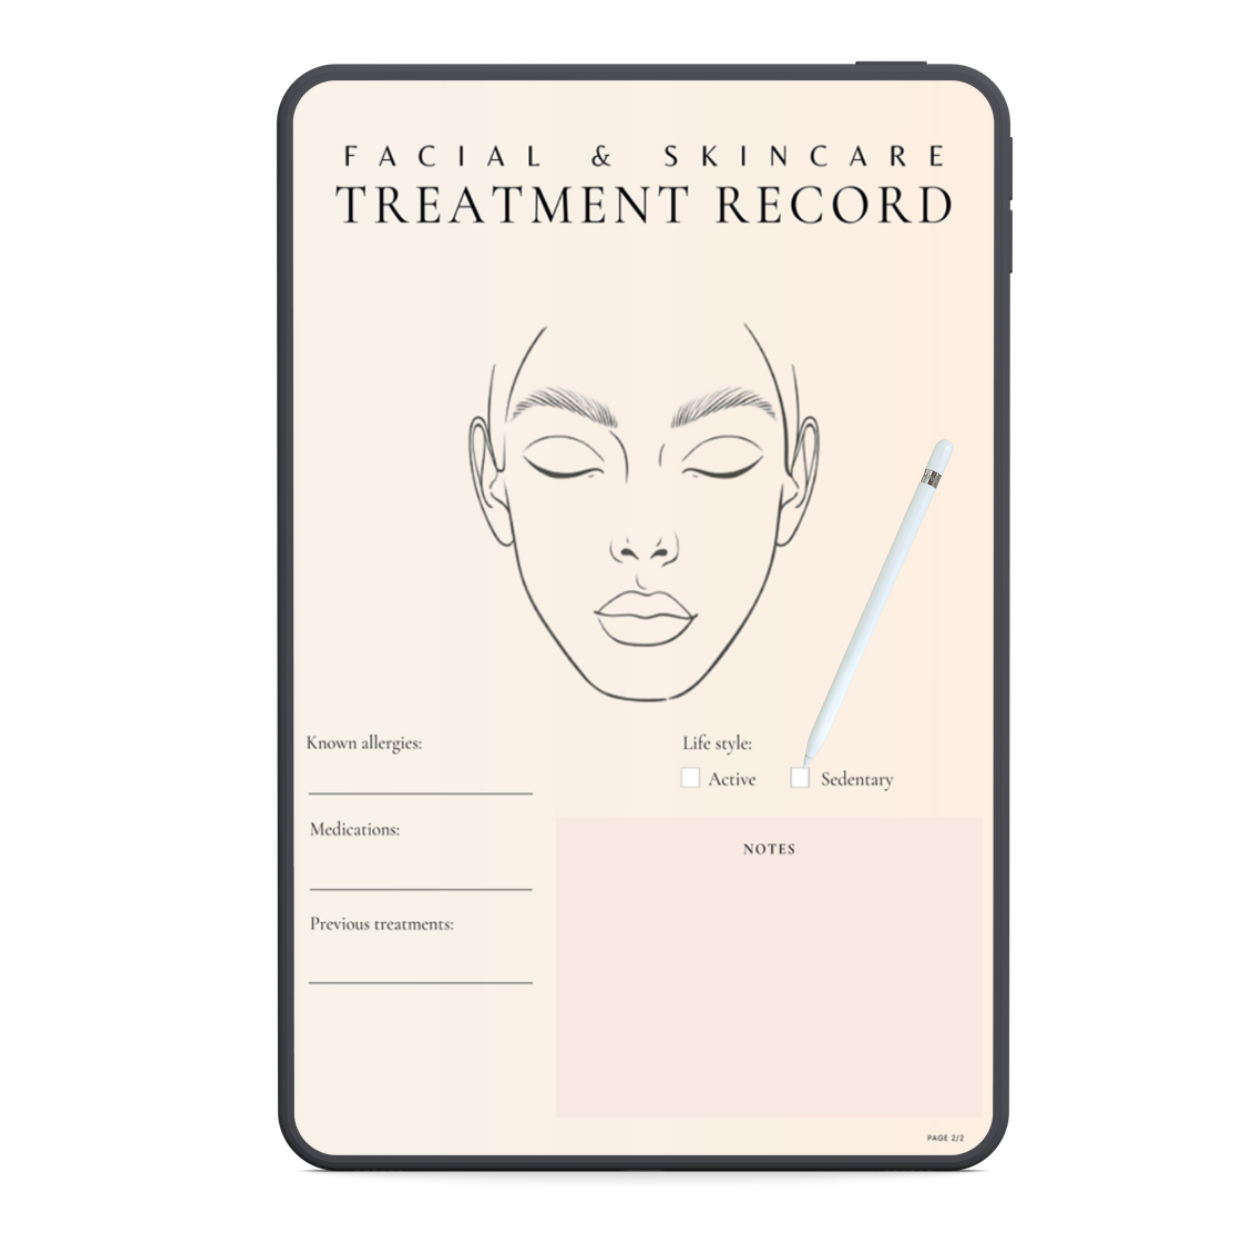 Facial & Skincare Record Book